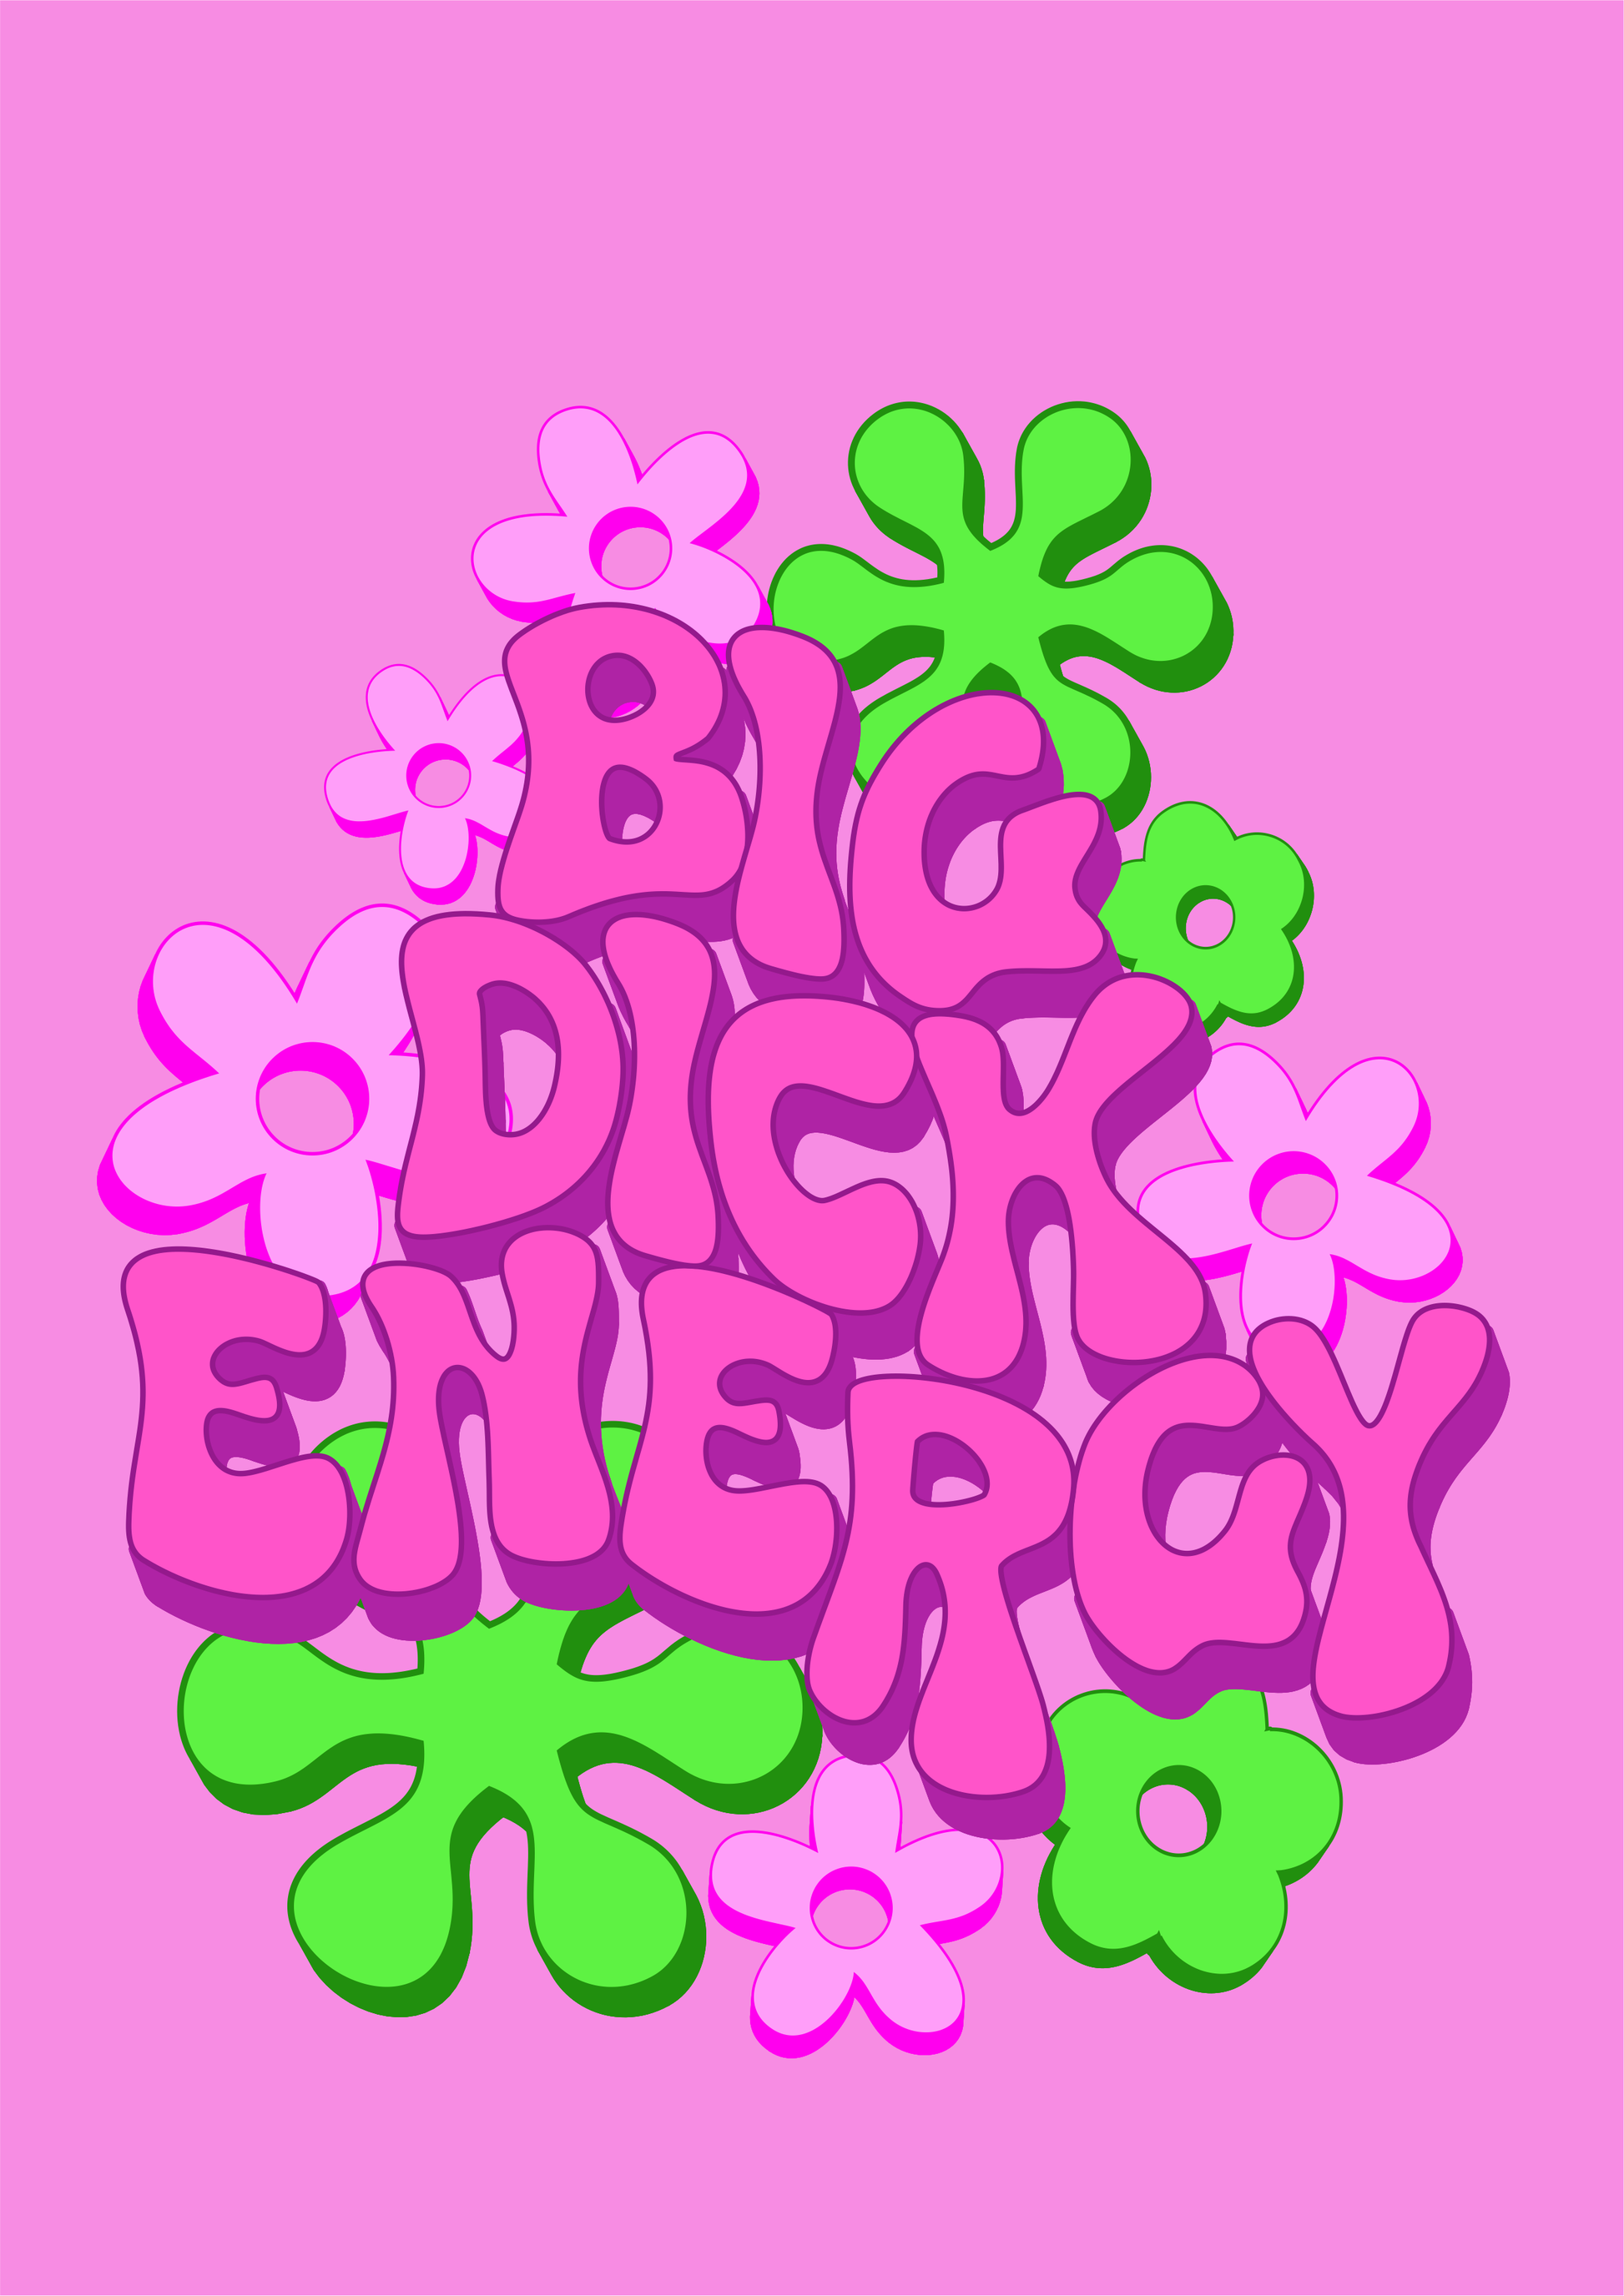 Big Dick Energy Wall Print - PrintedWeird